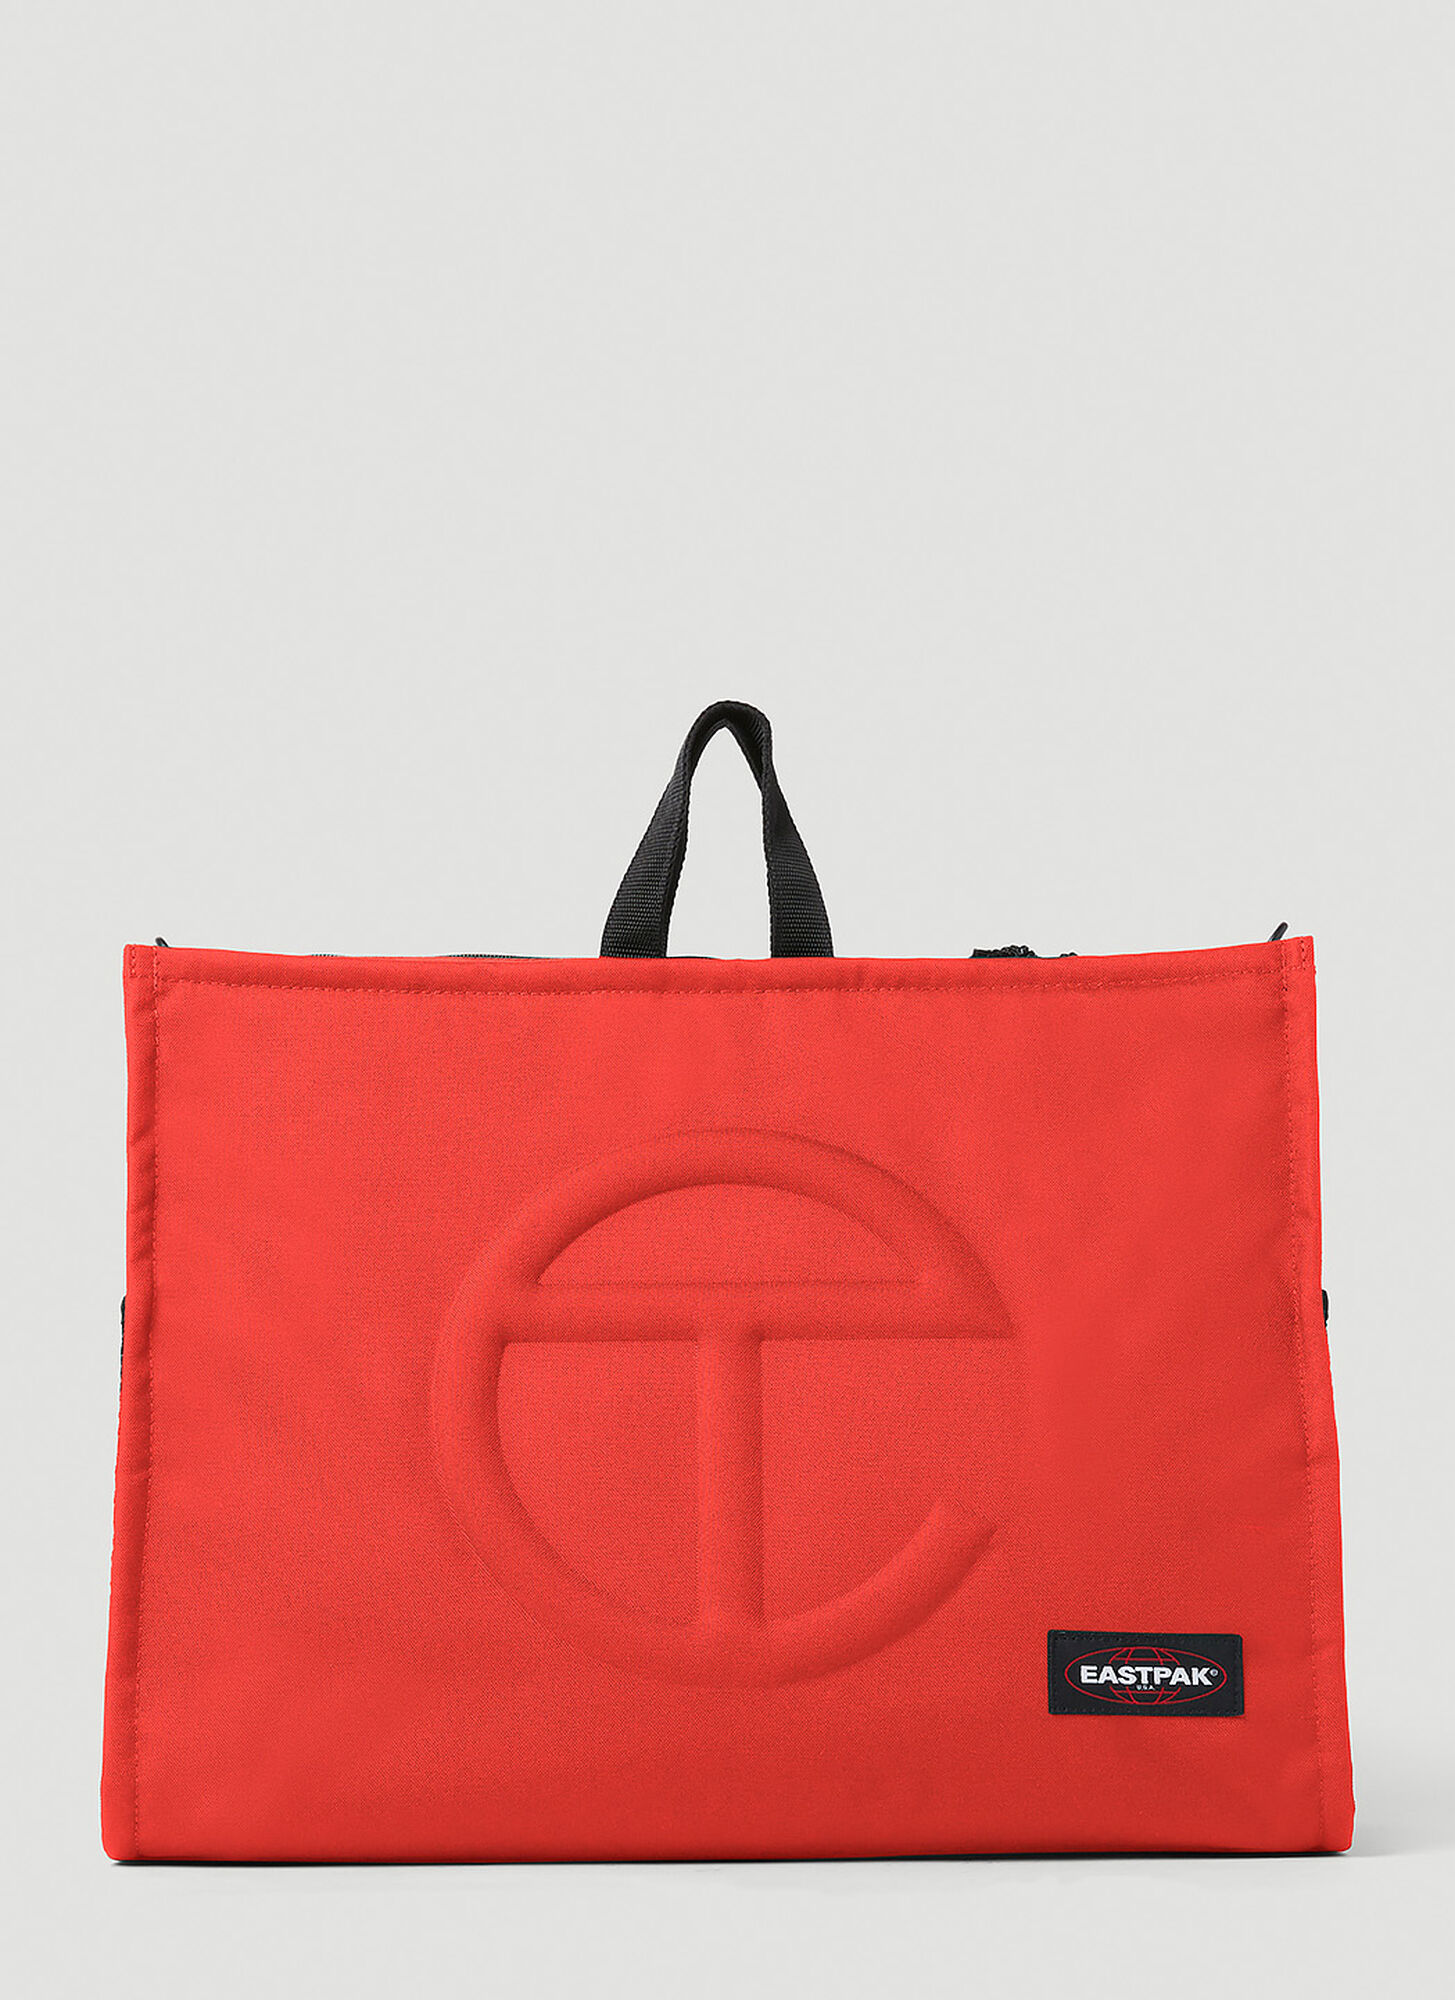 Eastpak X Telfar Shopper Large Tote Bag In Red